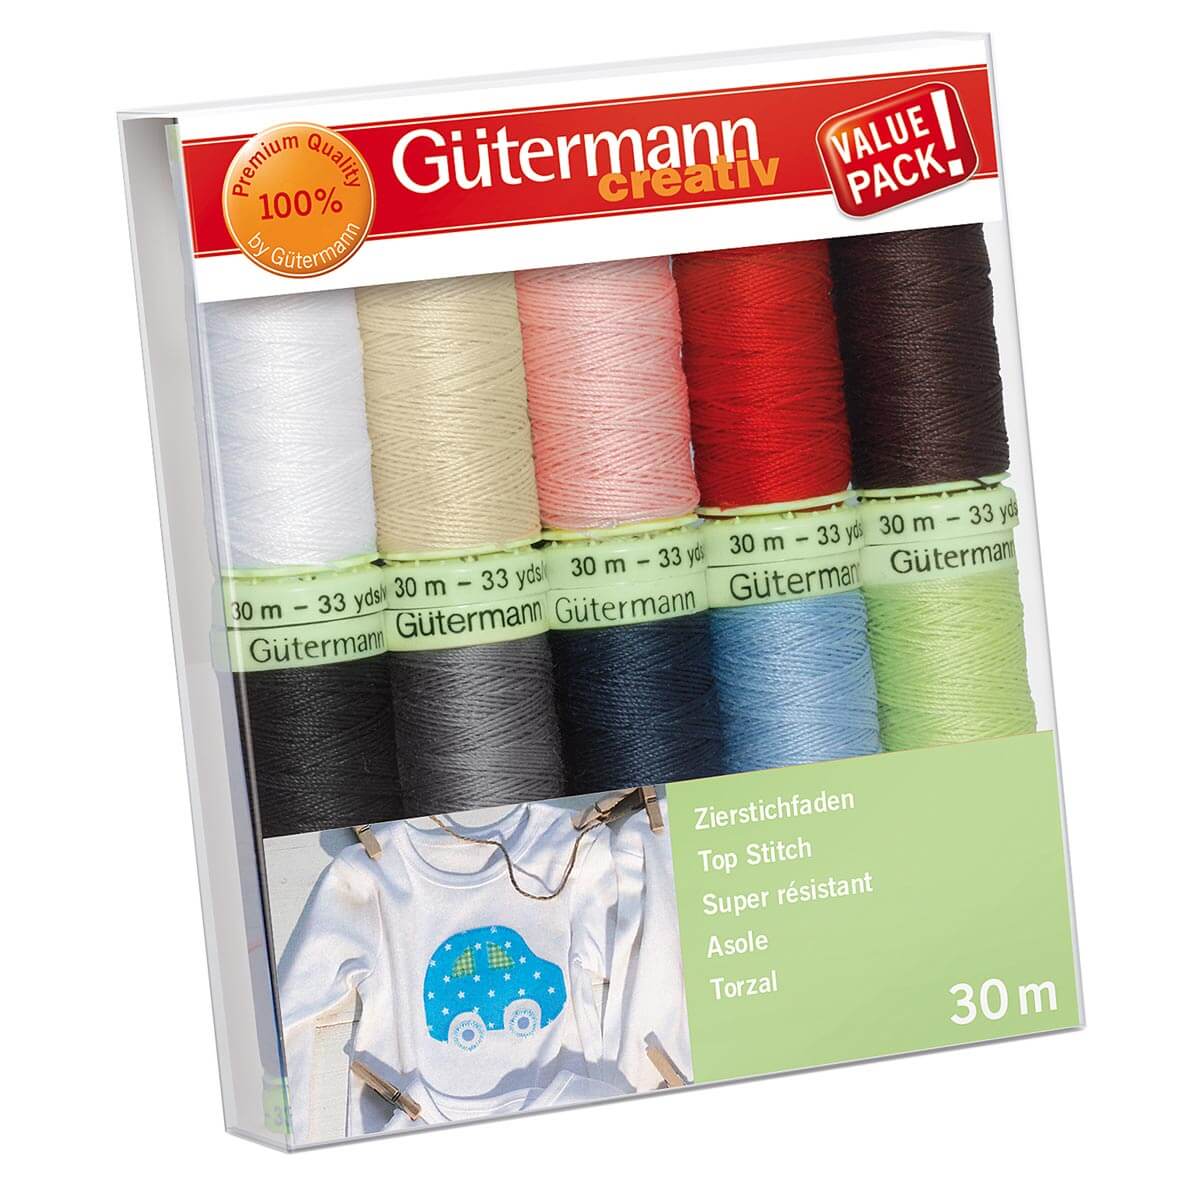 Gutermann 731154 Набор швейных нитей 'Top Stitch' 30 м,10 кат.